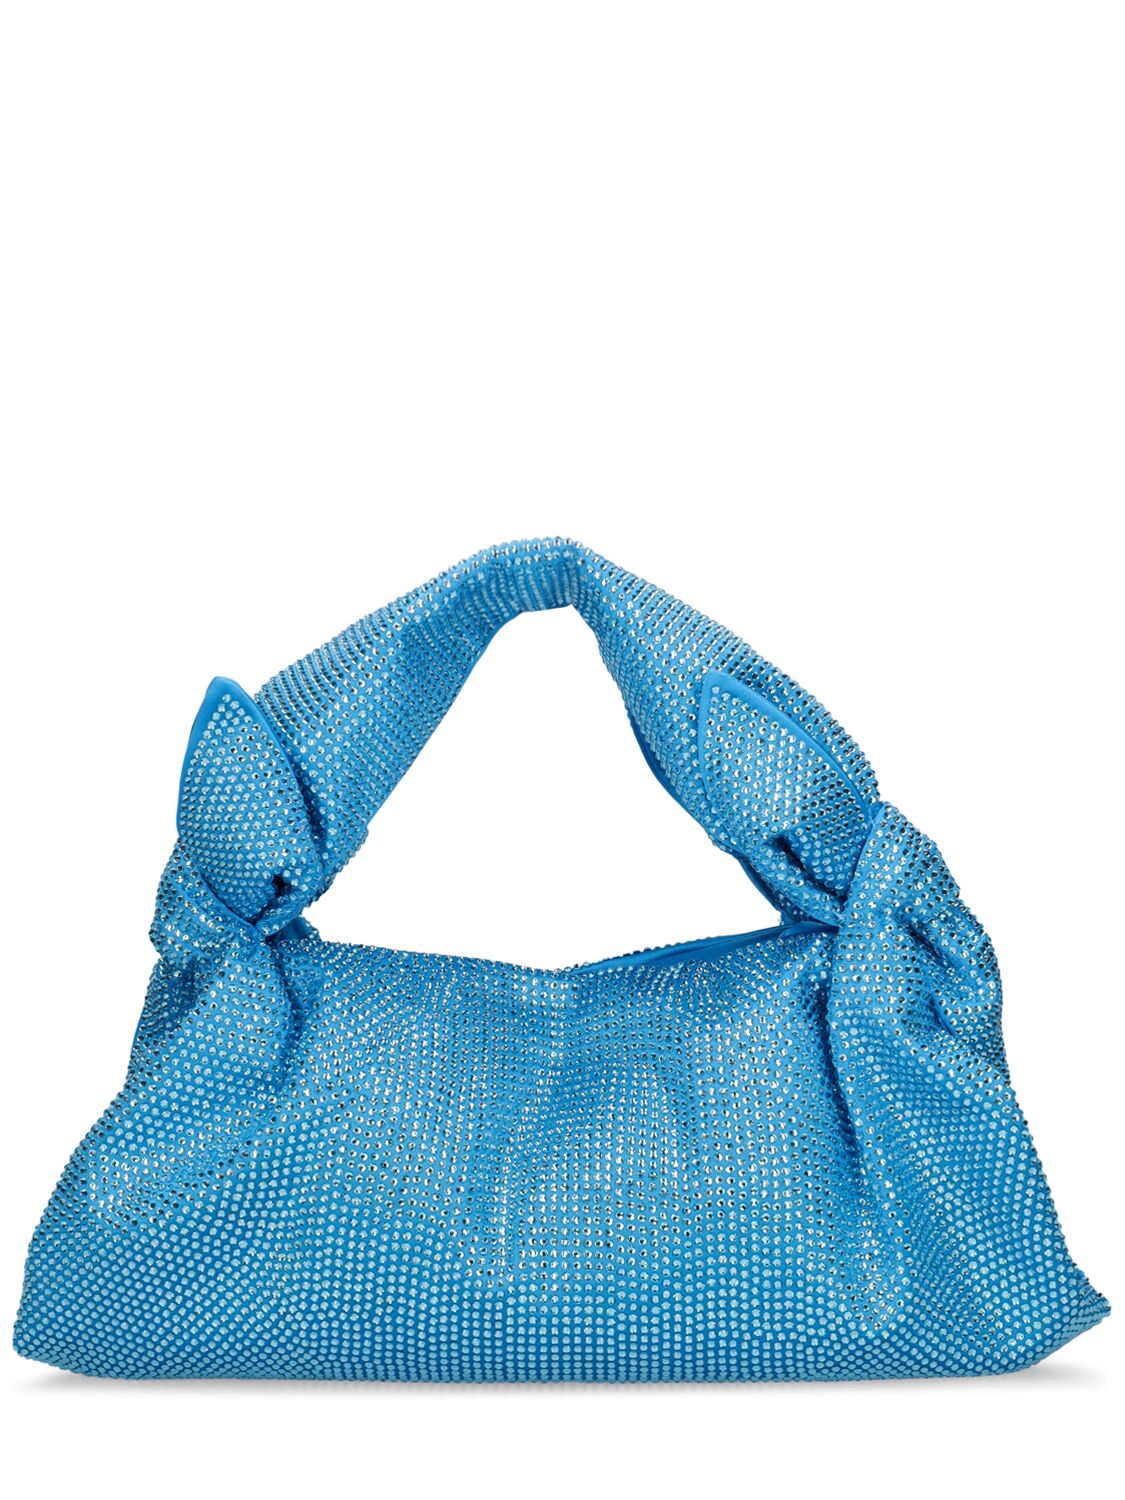 Crystal Top Handle Bag